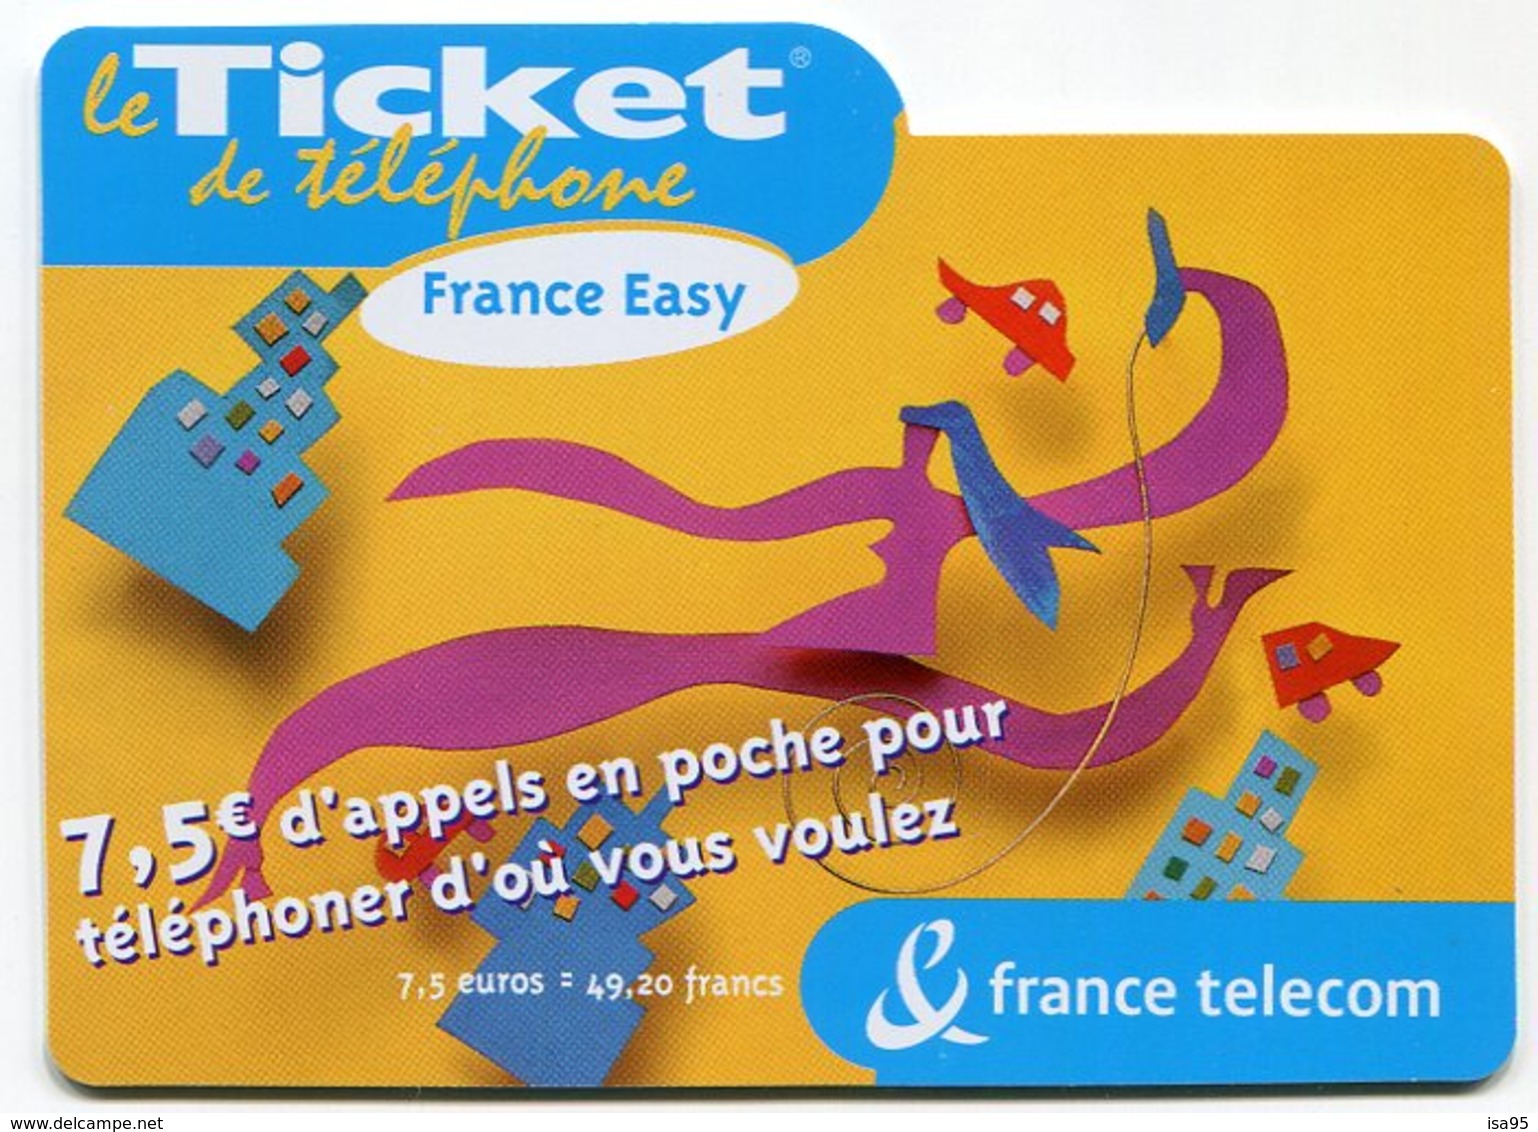 TELECARTE-LE TICKET DE TELEPHONE FRANCE EASY-2004-7.5€ - FT